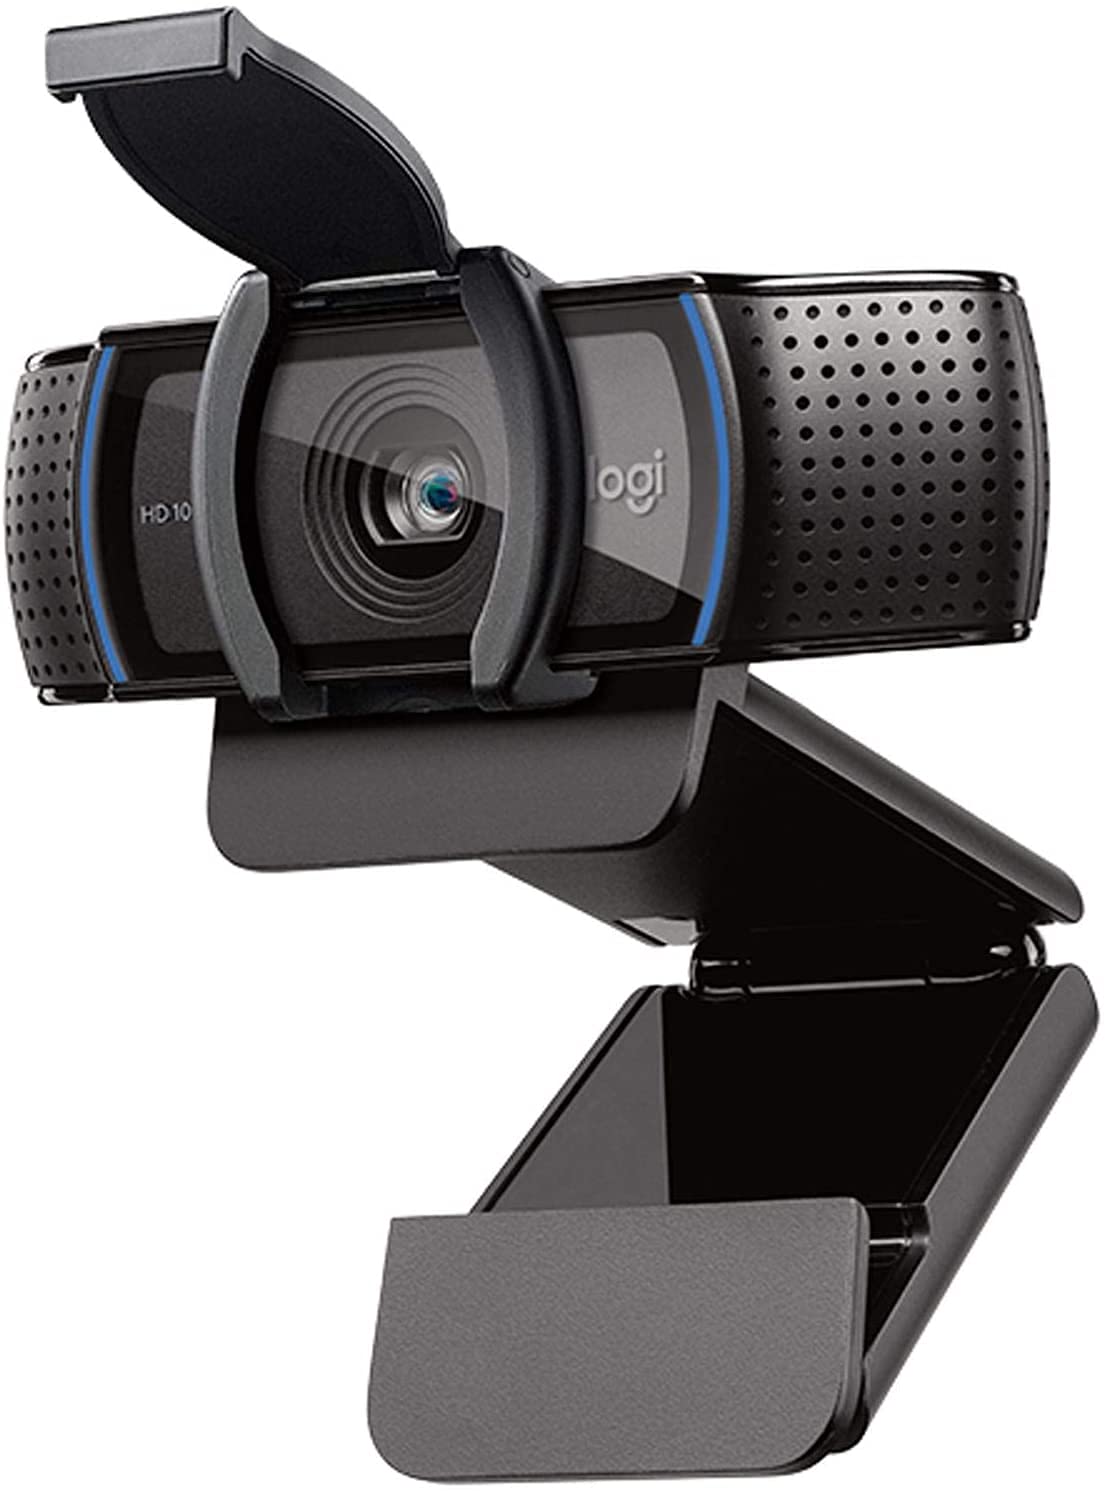 Logitech C920e BUSINESS WEBCAM 1080p business webcam perfect for mass deployment